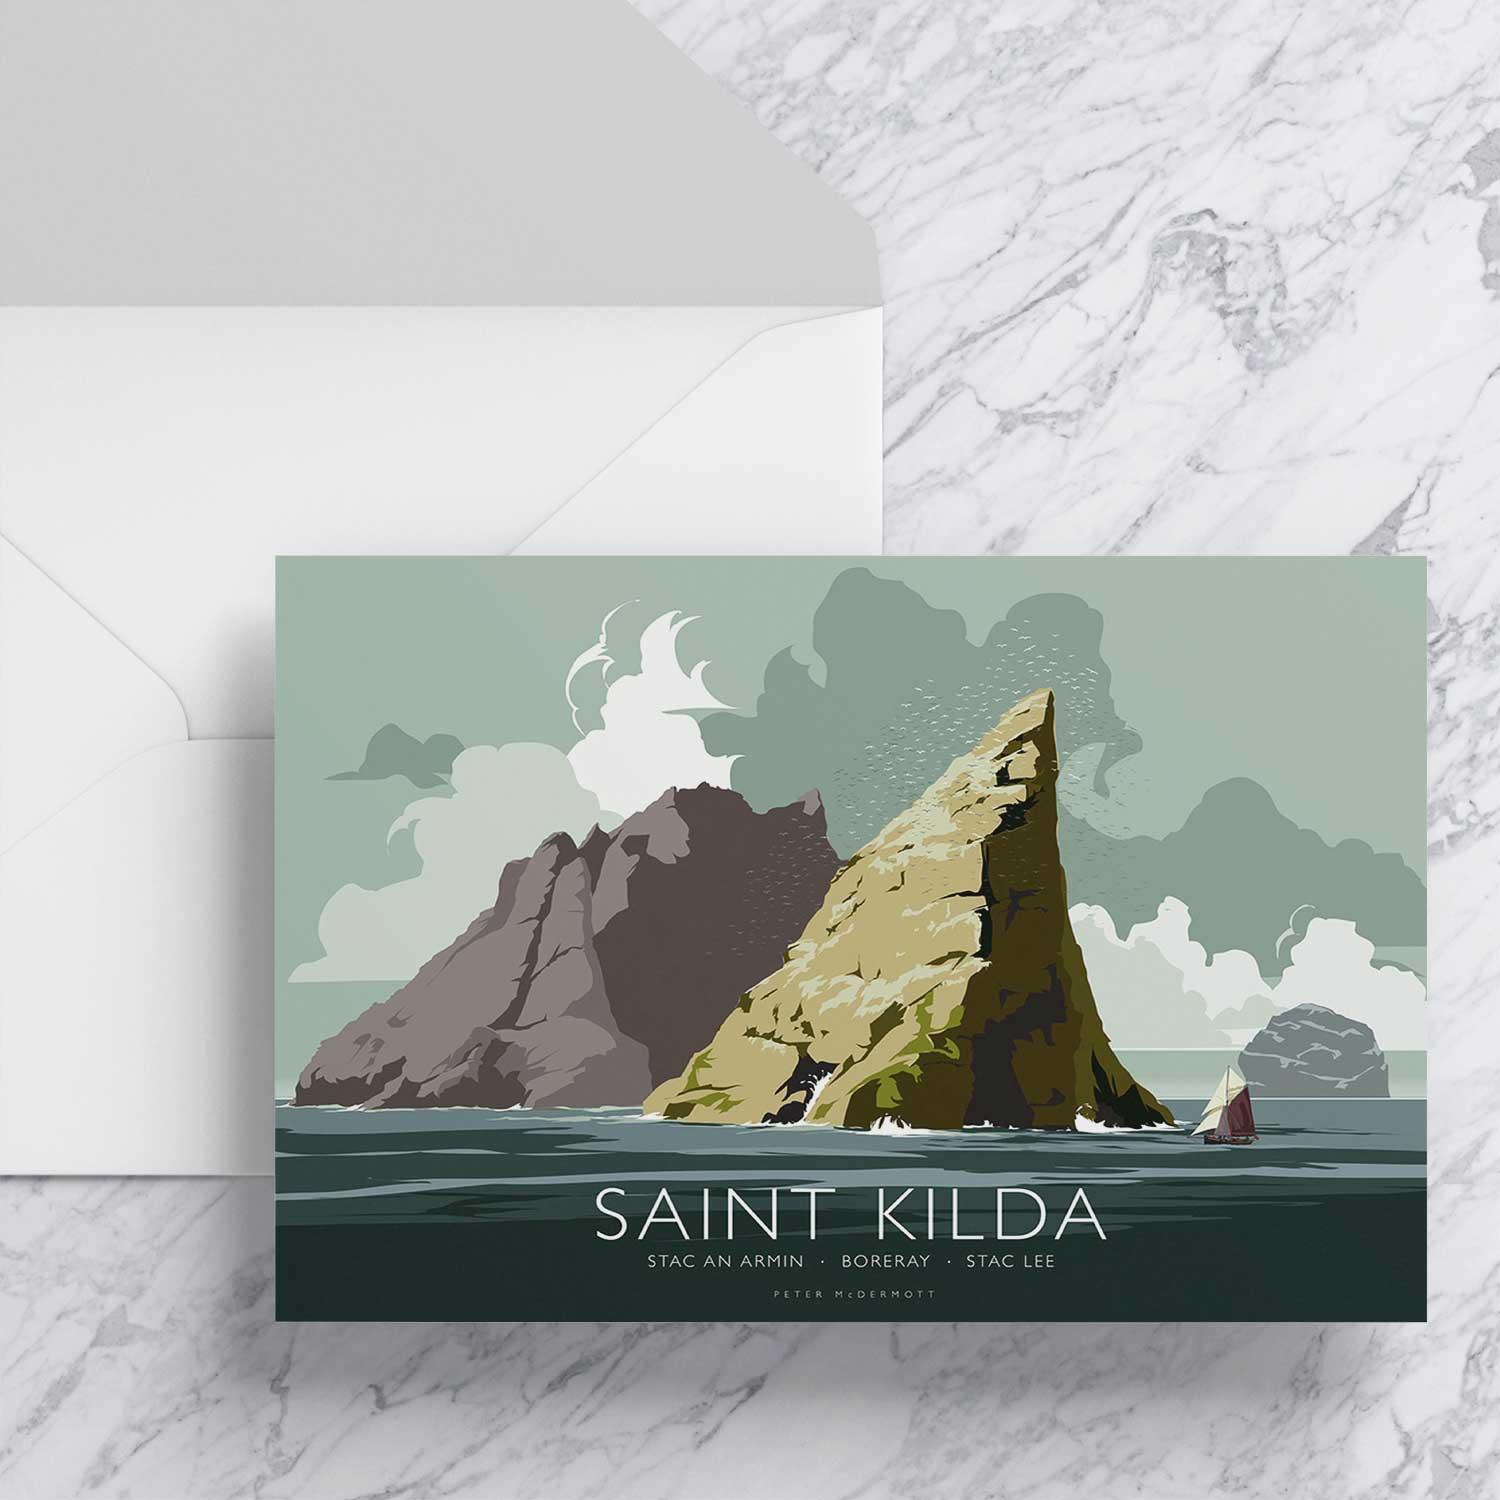 Saint Kilda Greeting Card from an original painting by artist Peter McDermott